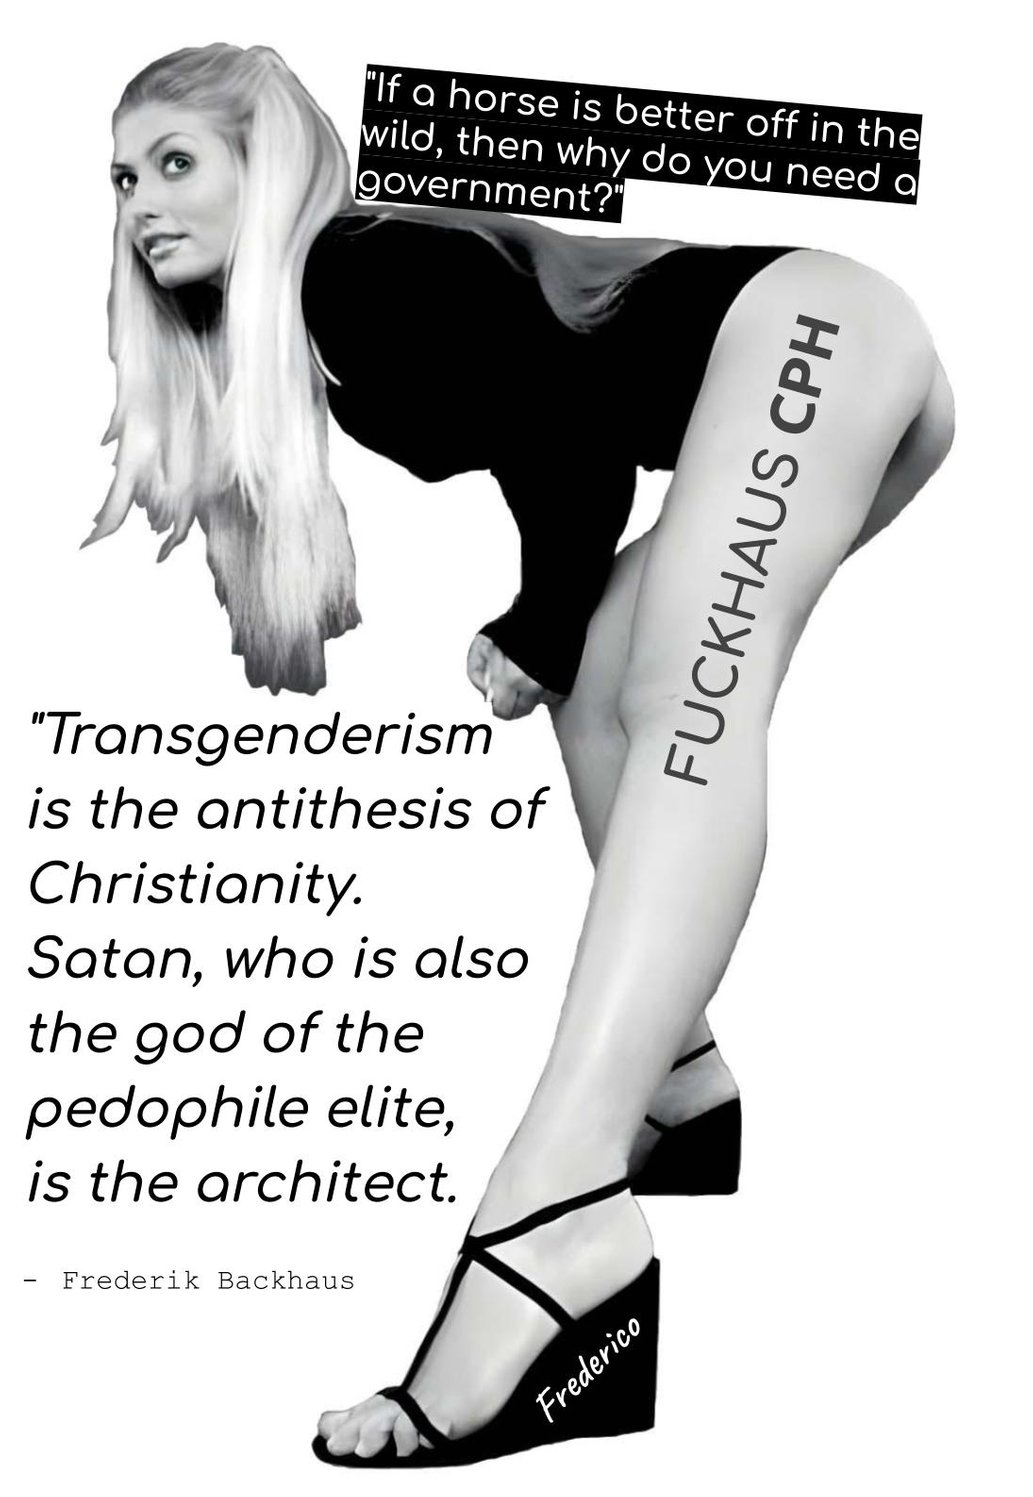 "Transgenderism" by Frederik Backhaus